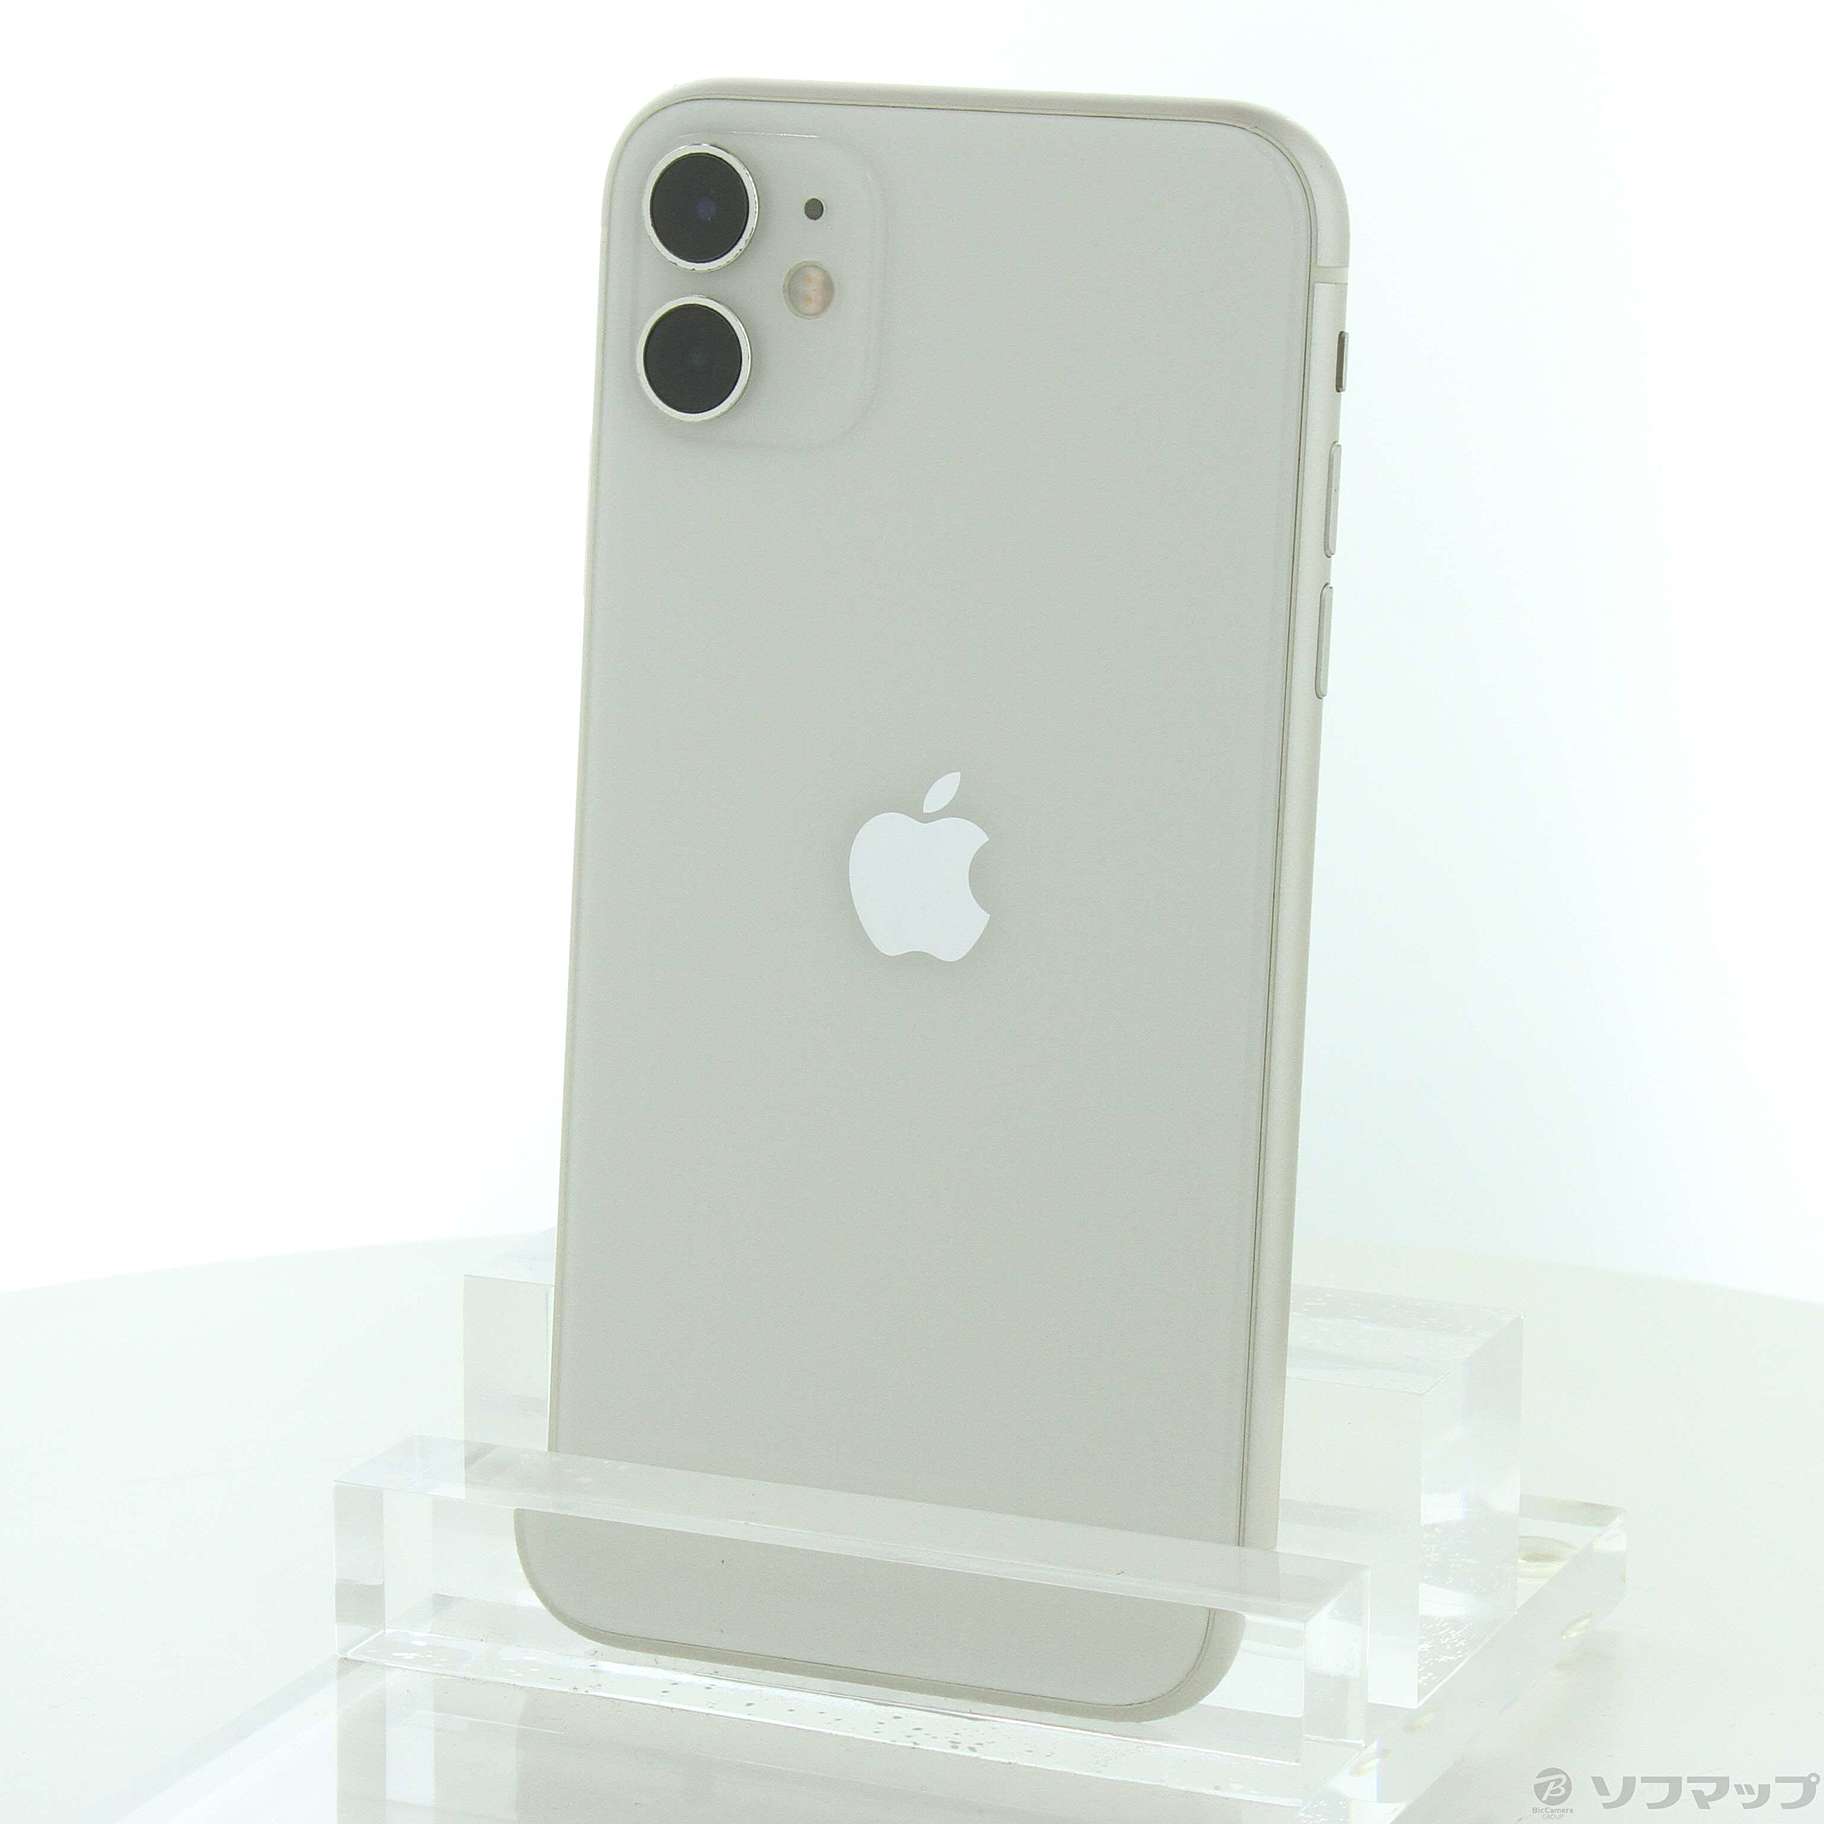 Apple iPhone iPhone 11 64GB ホワイト